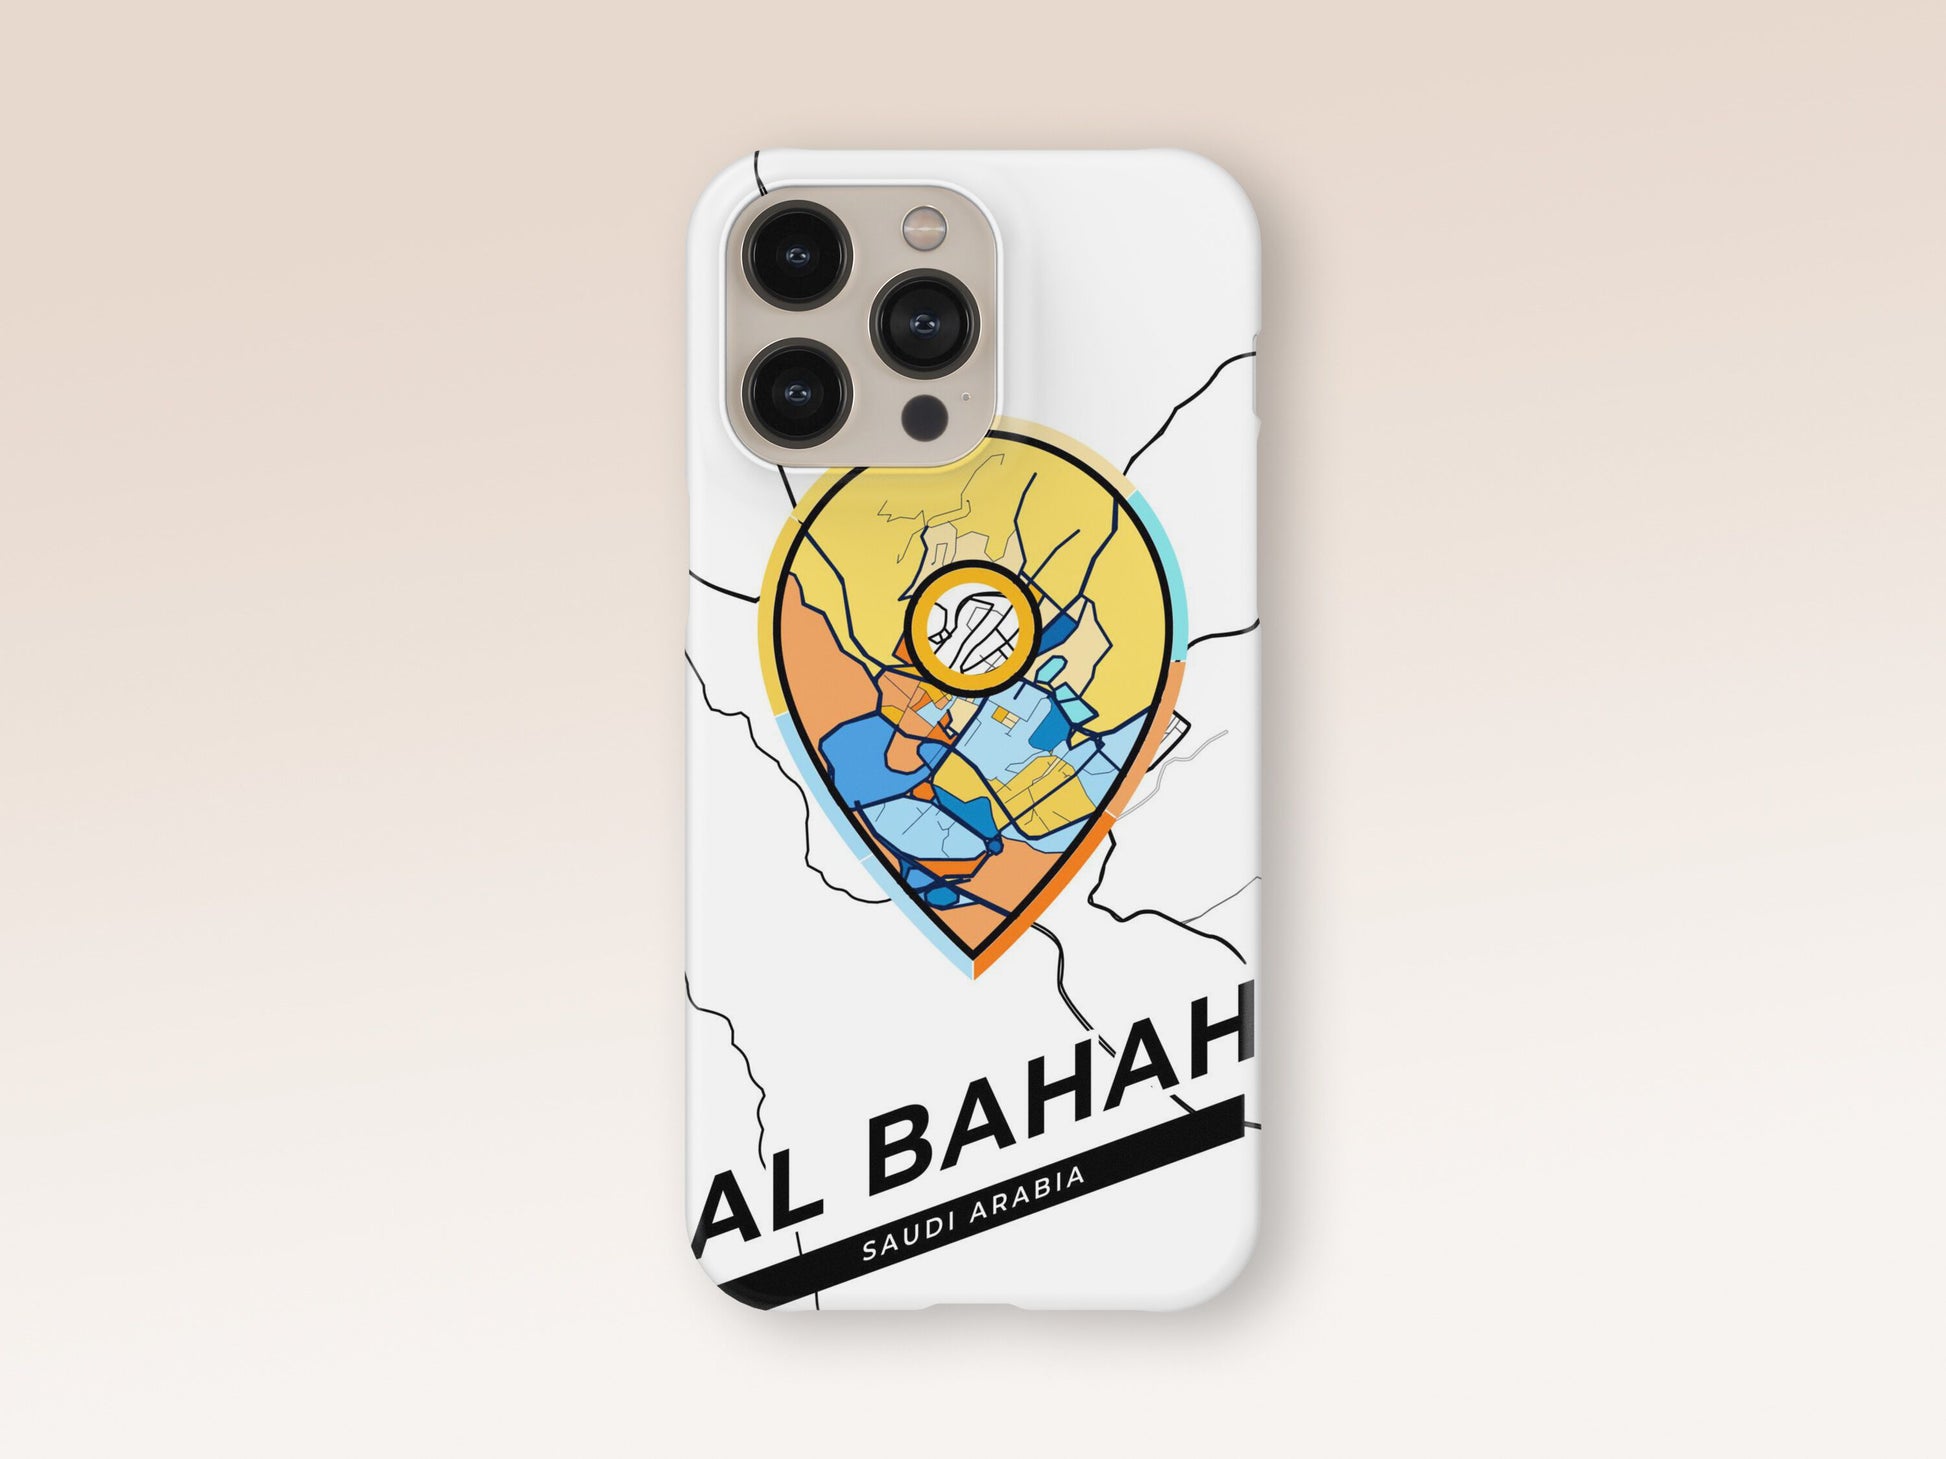 Al Bahah Saudi Arabia slim phone case with colorful icon. Birthday, wedding or housewarming gift. Couple match cases. 1